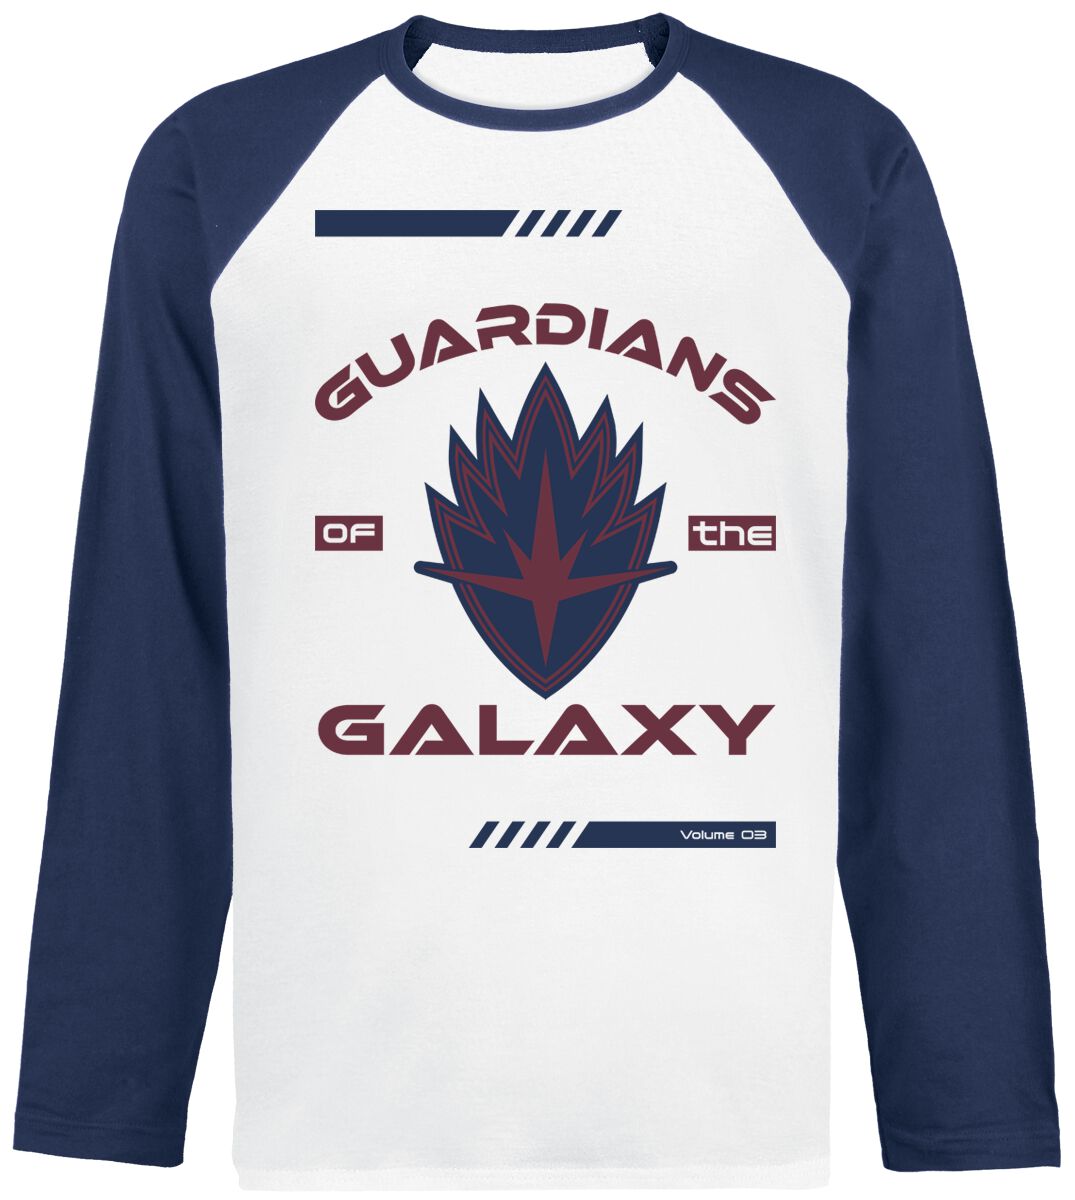 Guardians Of The Galaxy Vol. 3 - Badge Langarmshirt weiß navy in S